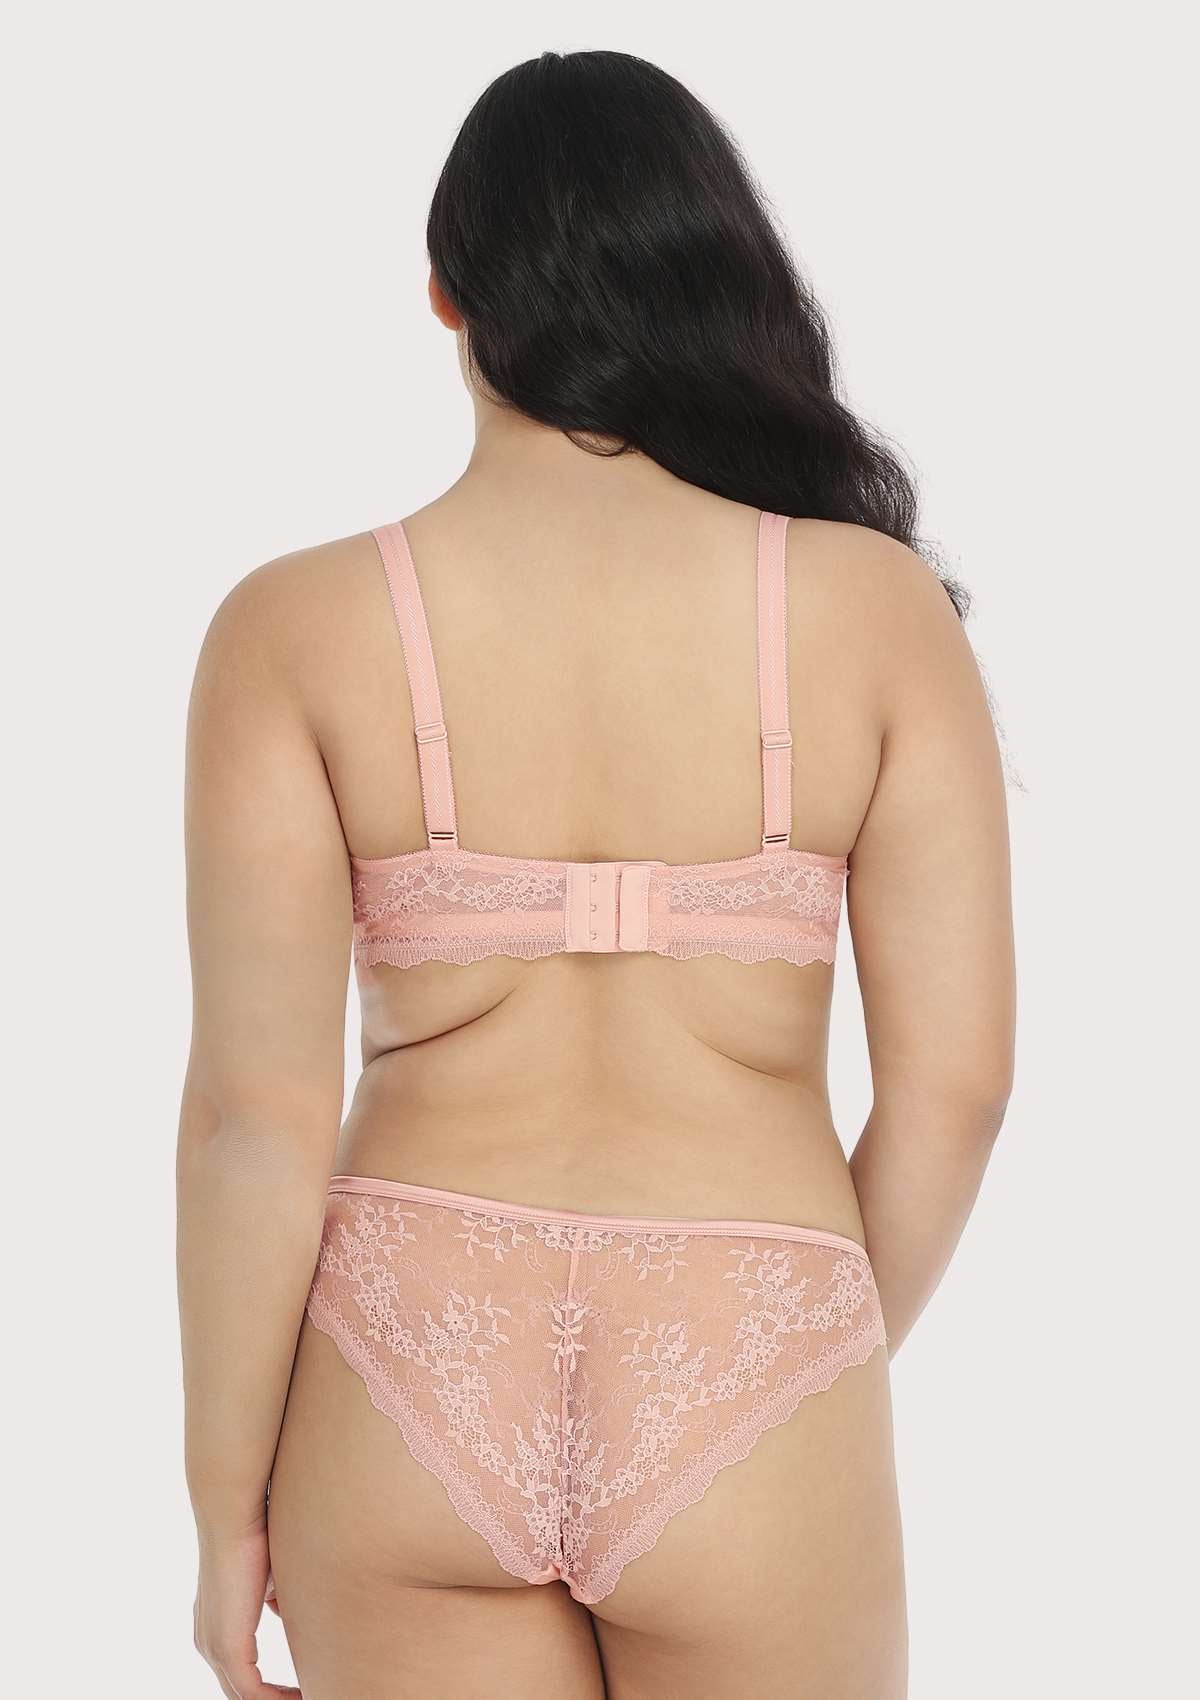 HSIA Floral Lace Unlined Bridal Balconette Delicate Bra Panty Set - Pink / 38 / D